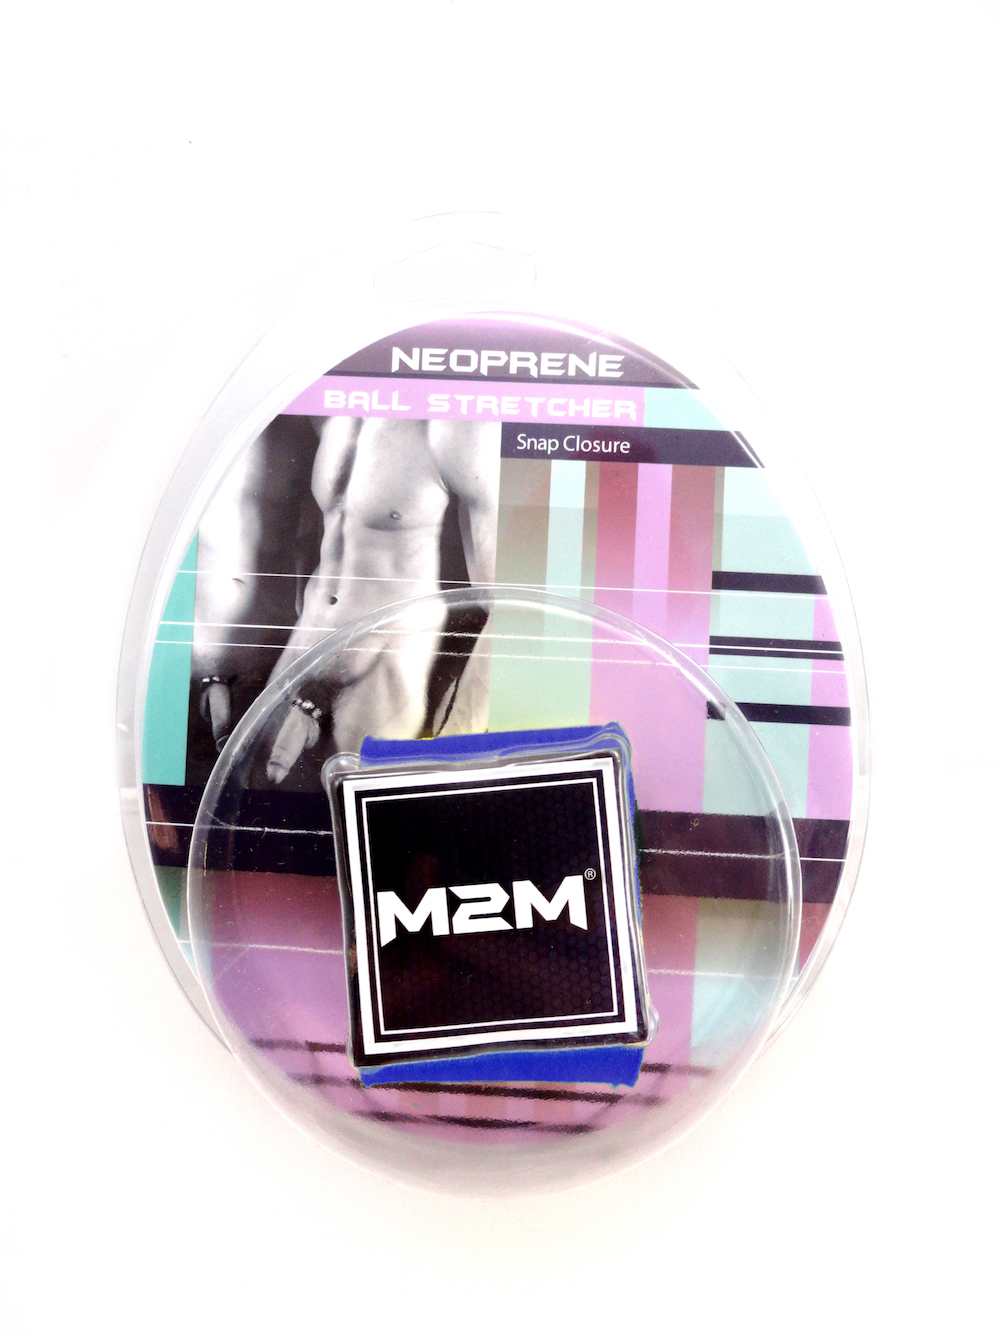 M2M NEOPRENE BALL STRETCHER 1.5 INCH - BLUE